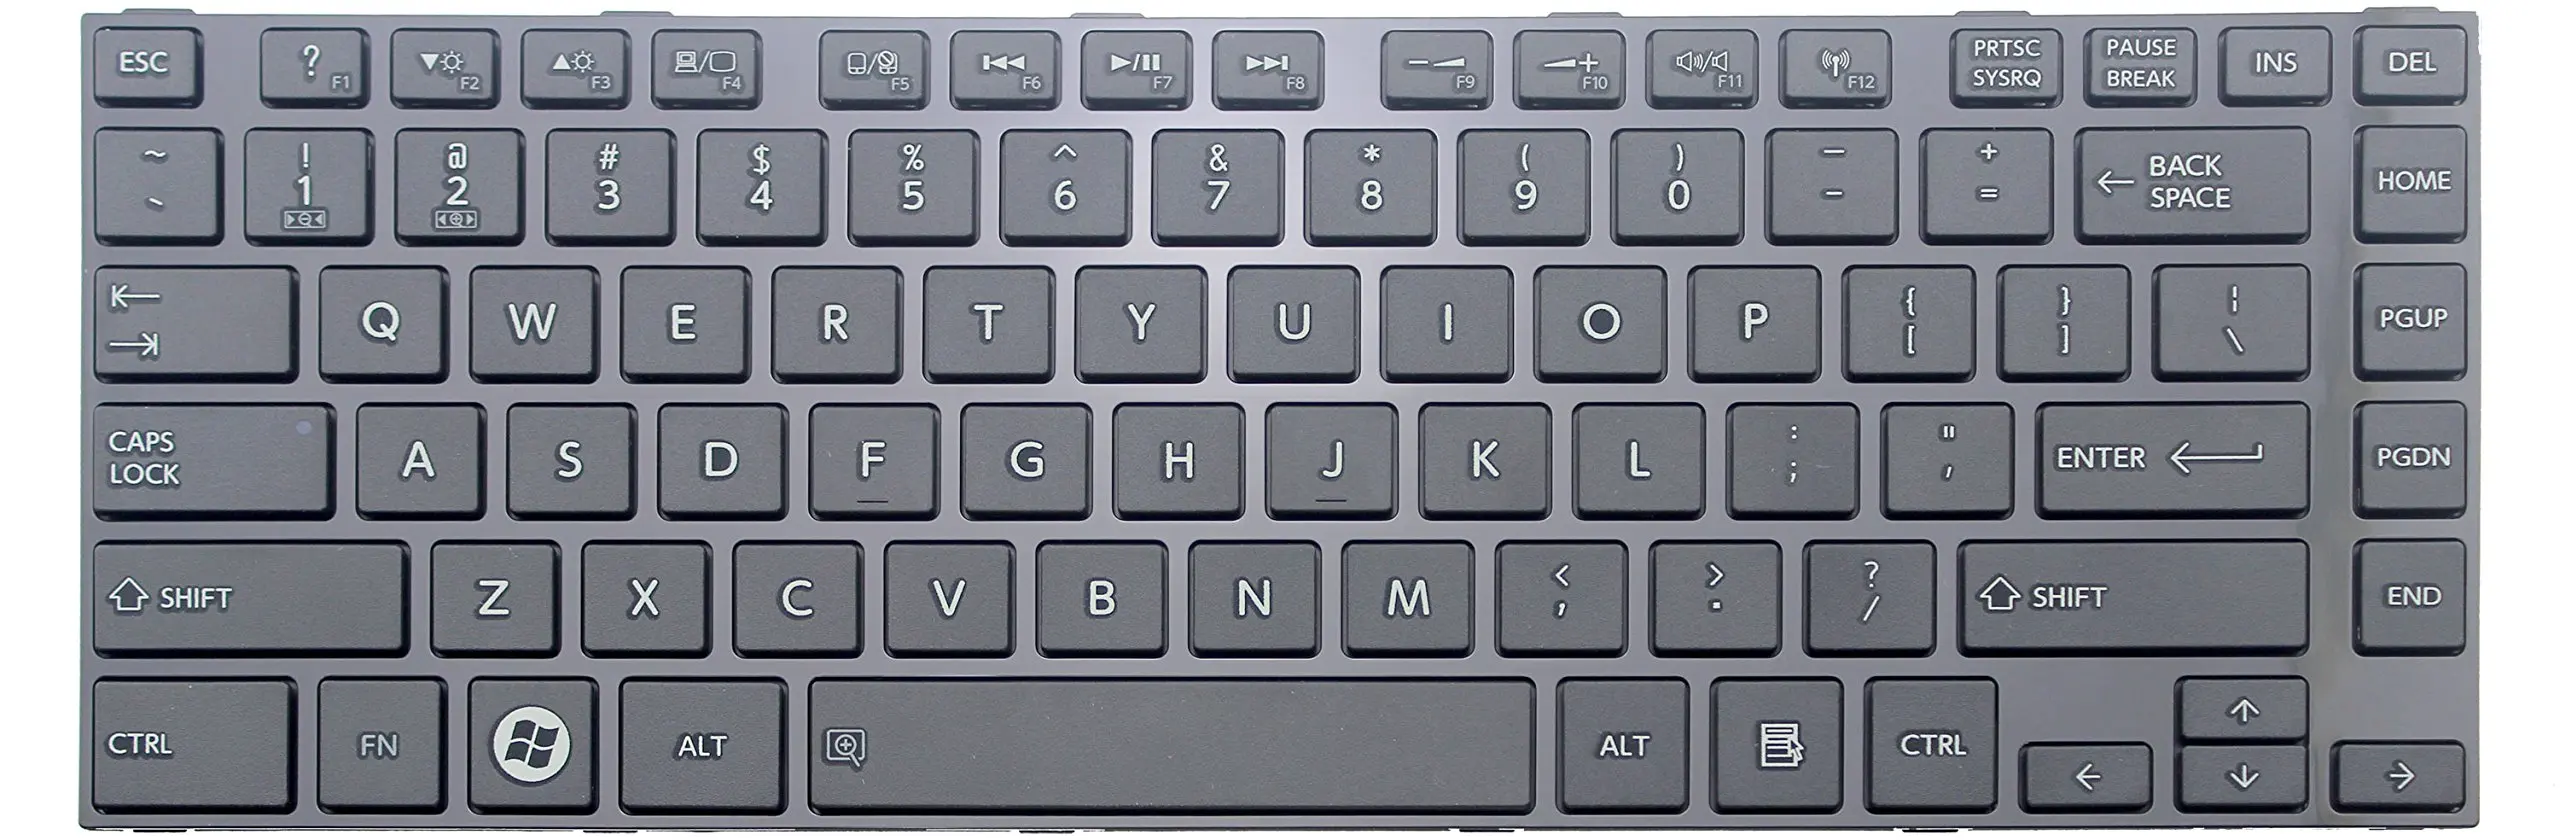 toshiba sattelite backlit keyboard settings windows 10